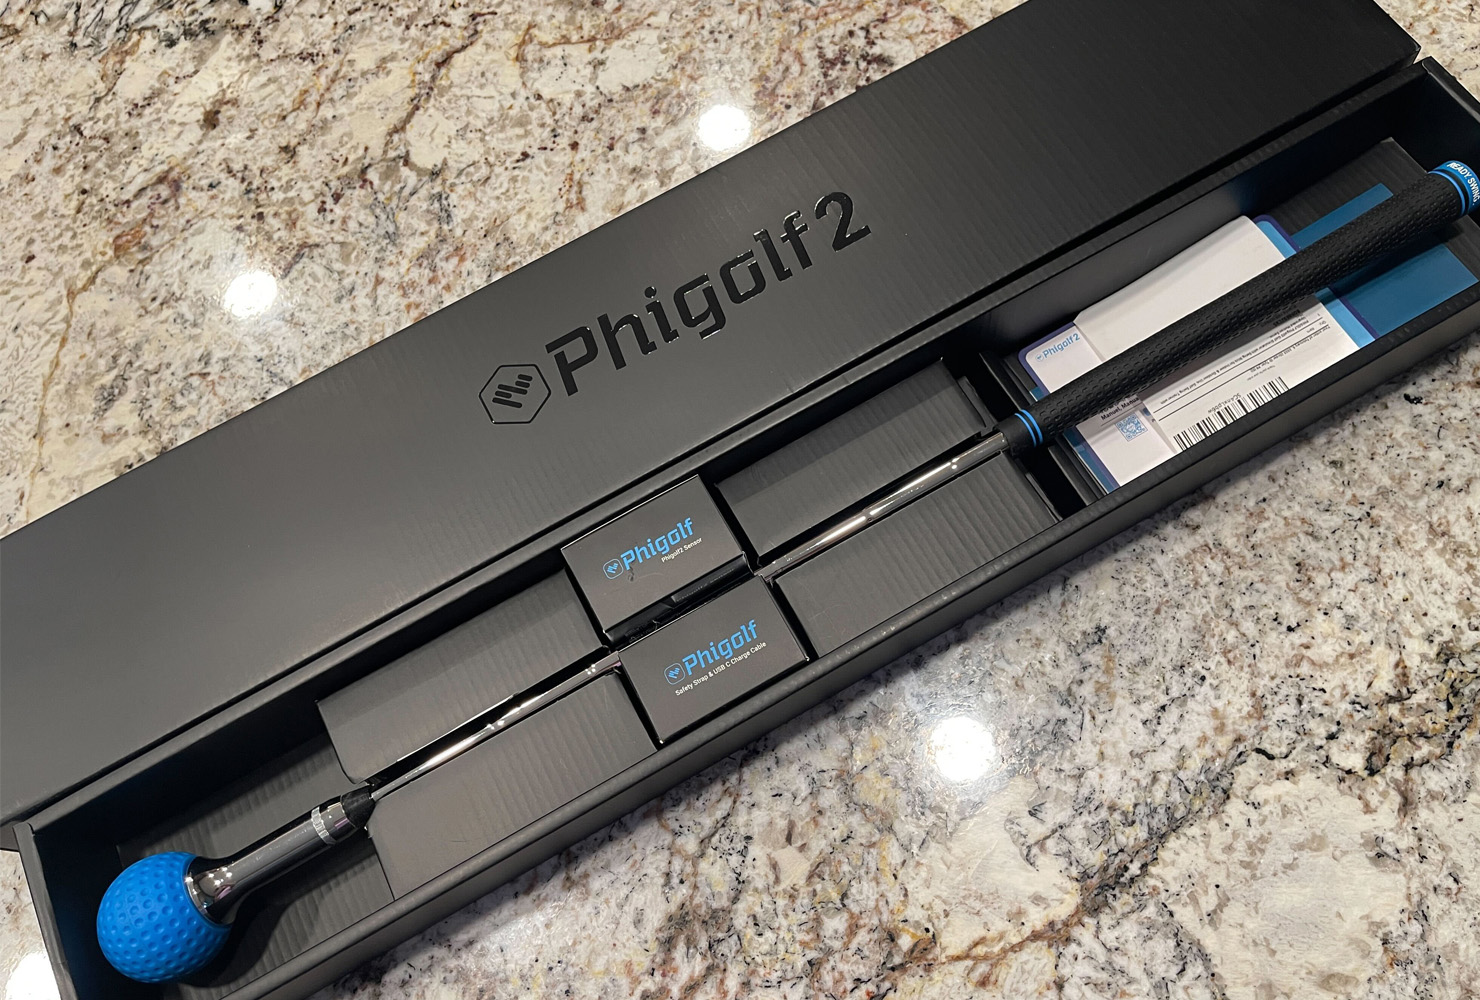 Phigolf 2 Mobile Golf Simulator - The Hackers Paradise